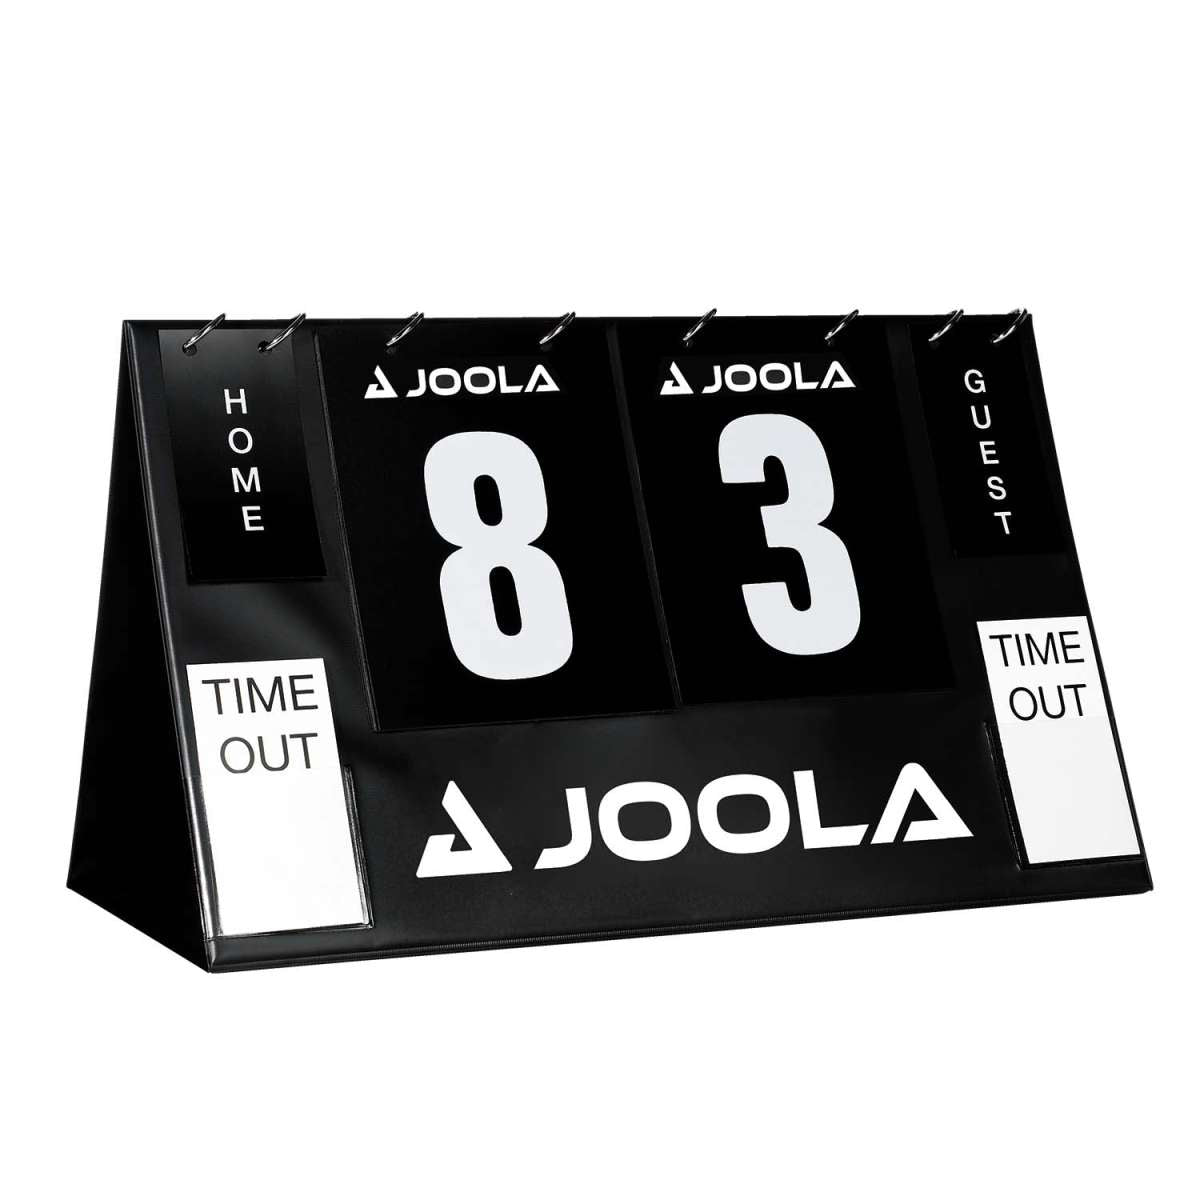 JOOLA Score master STANDARD